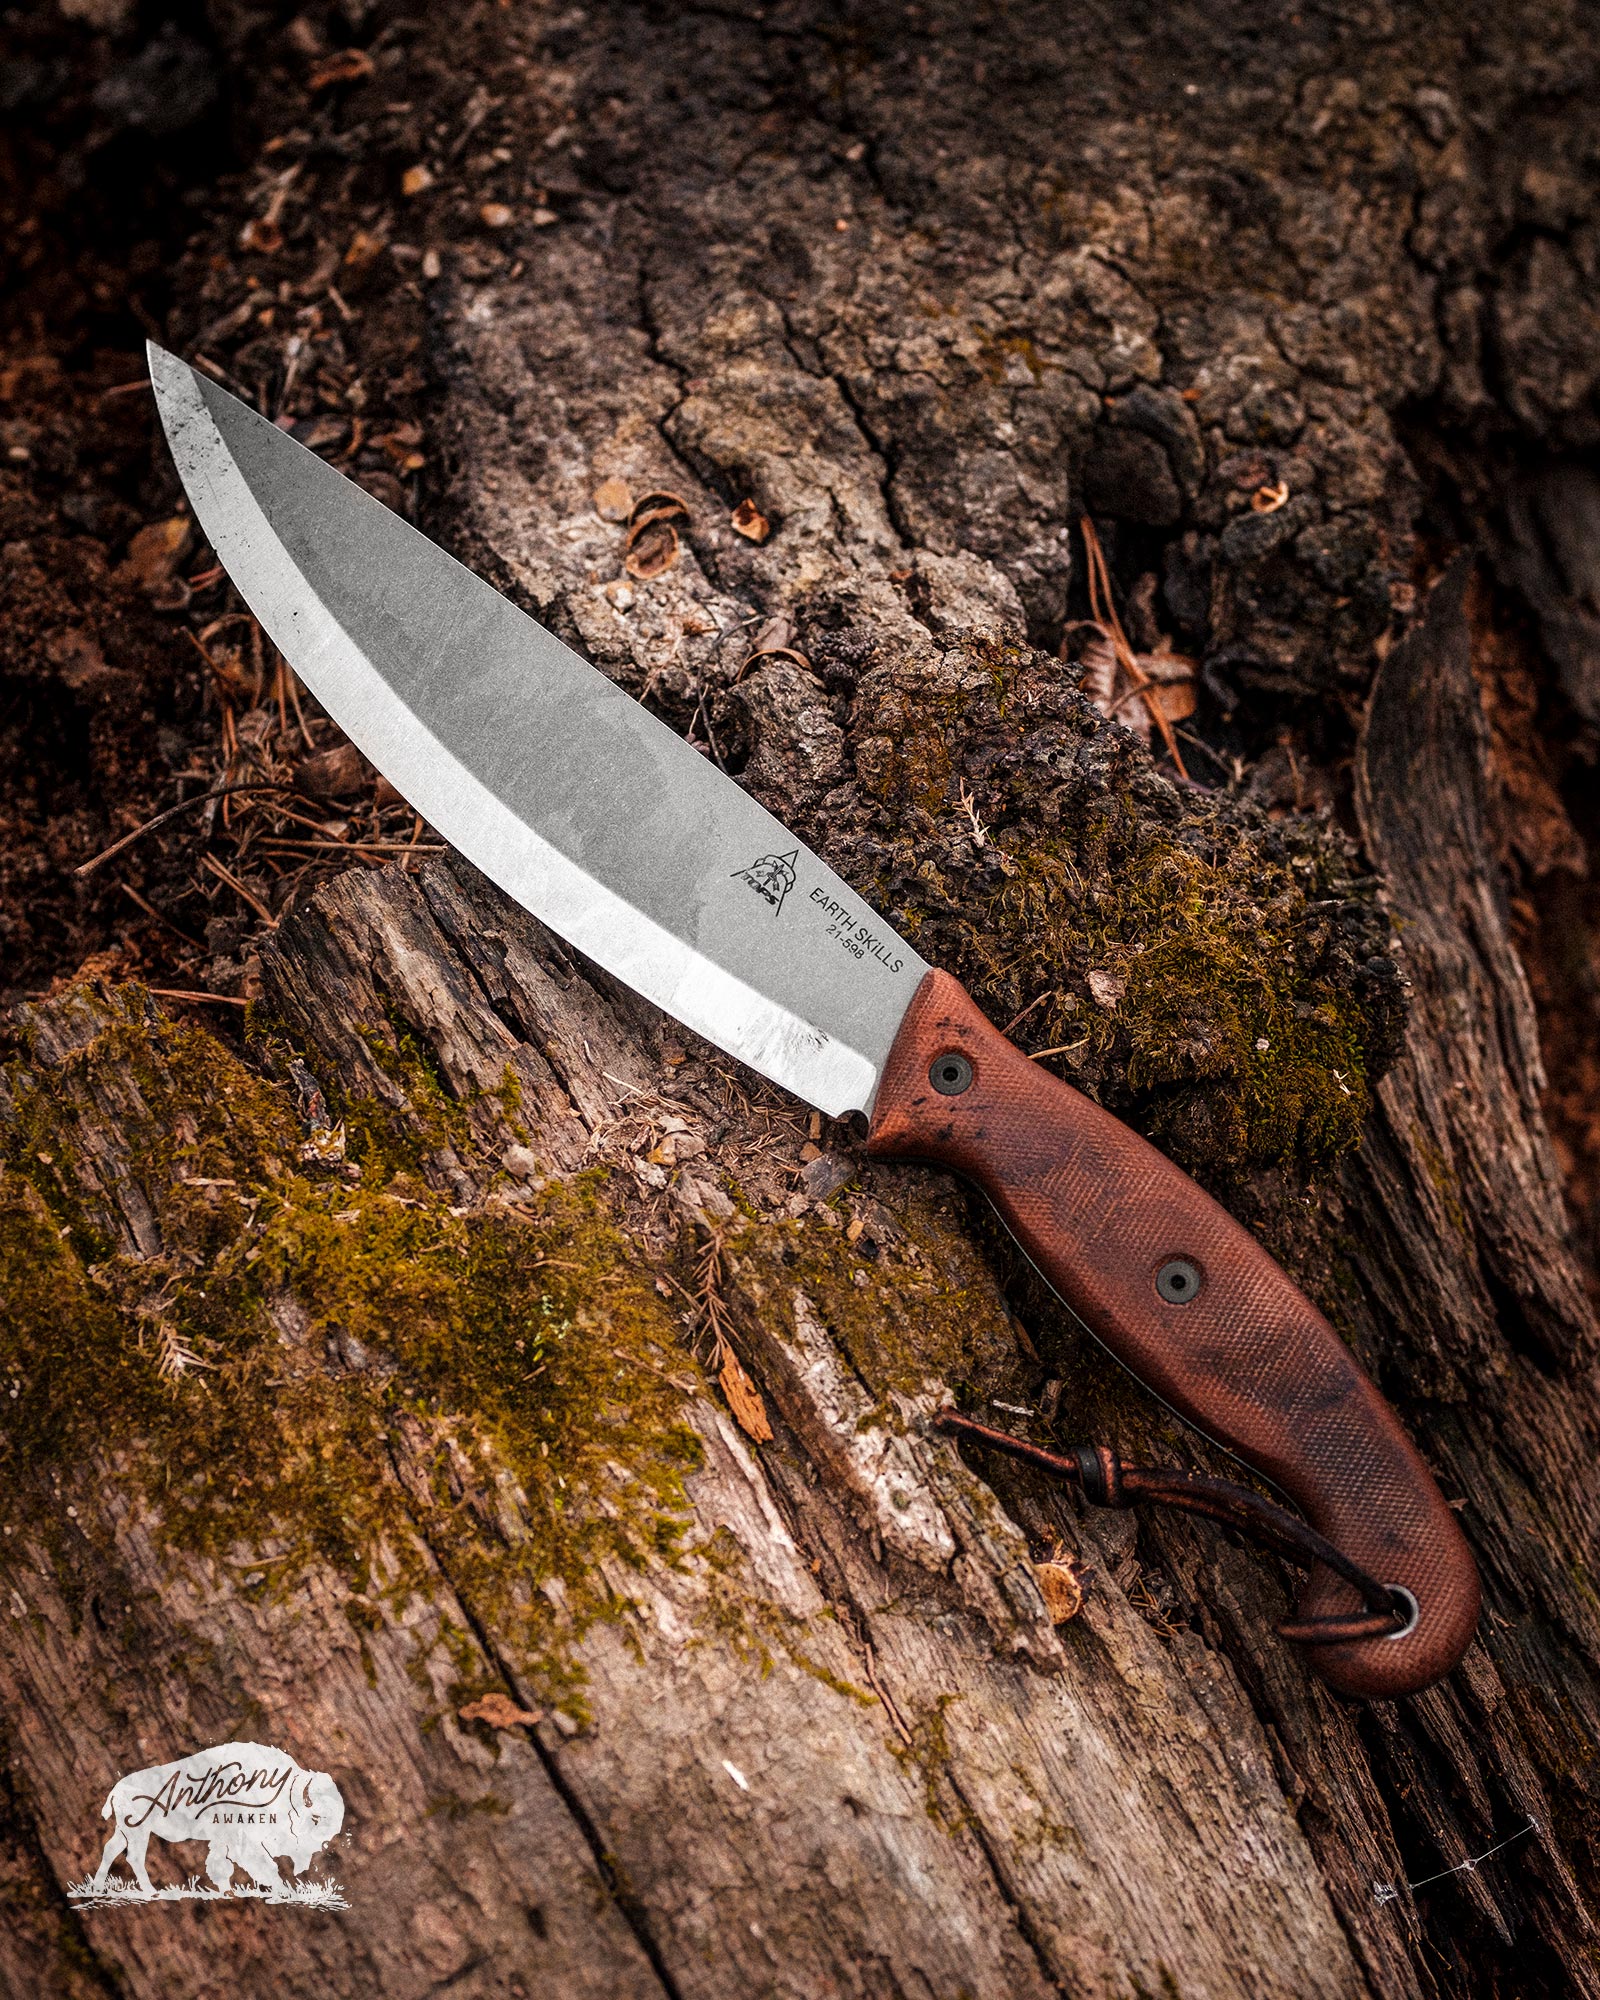 Tops Matt Graham Earth Skills Knife Review